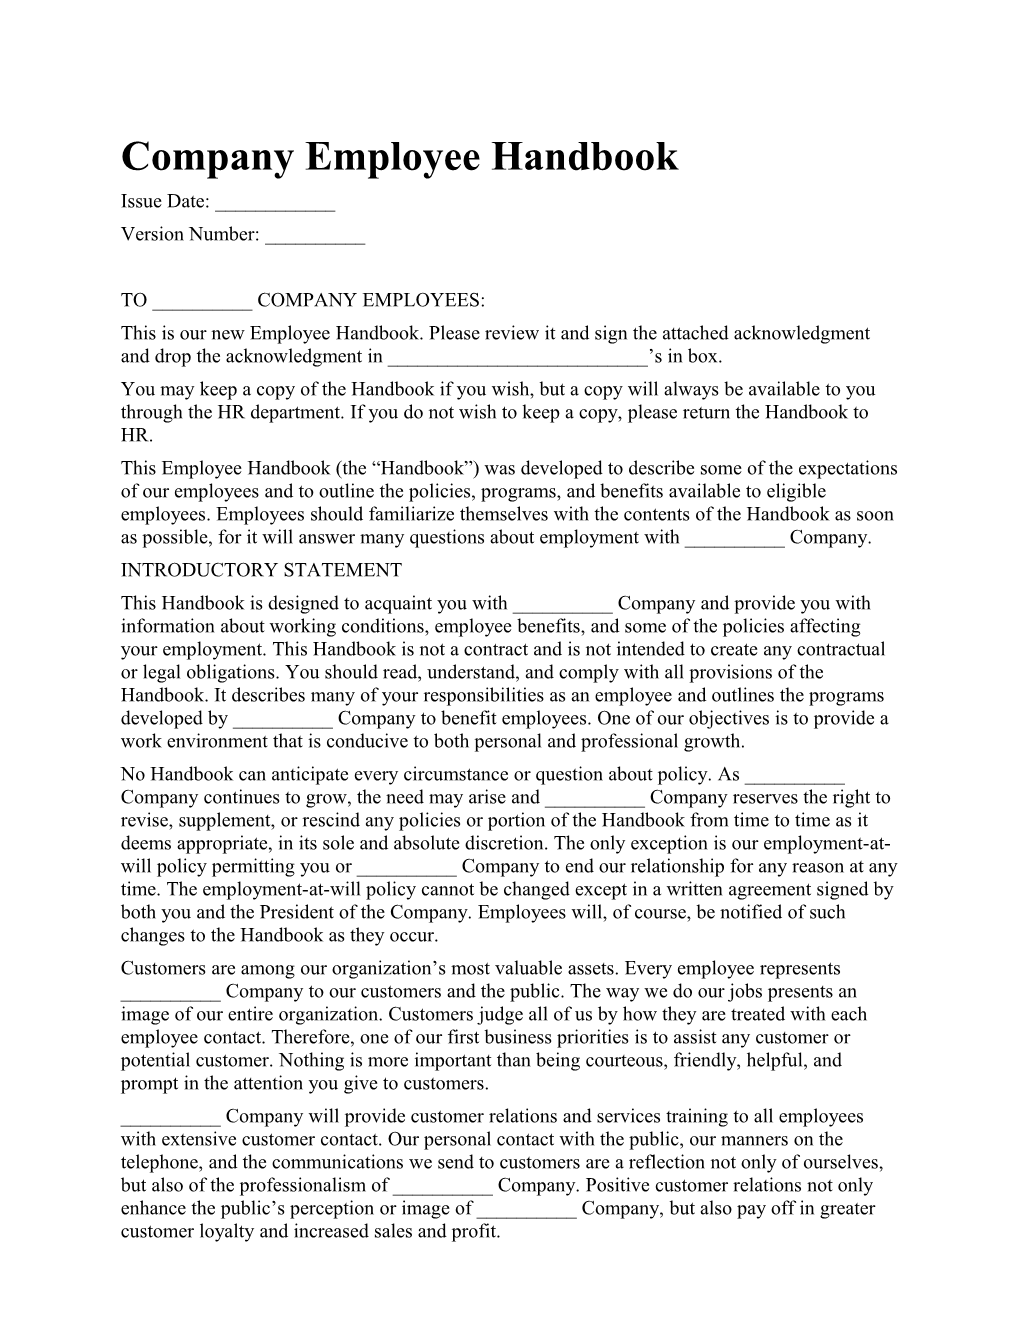 Company Employee Handbook